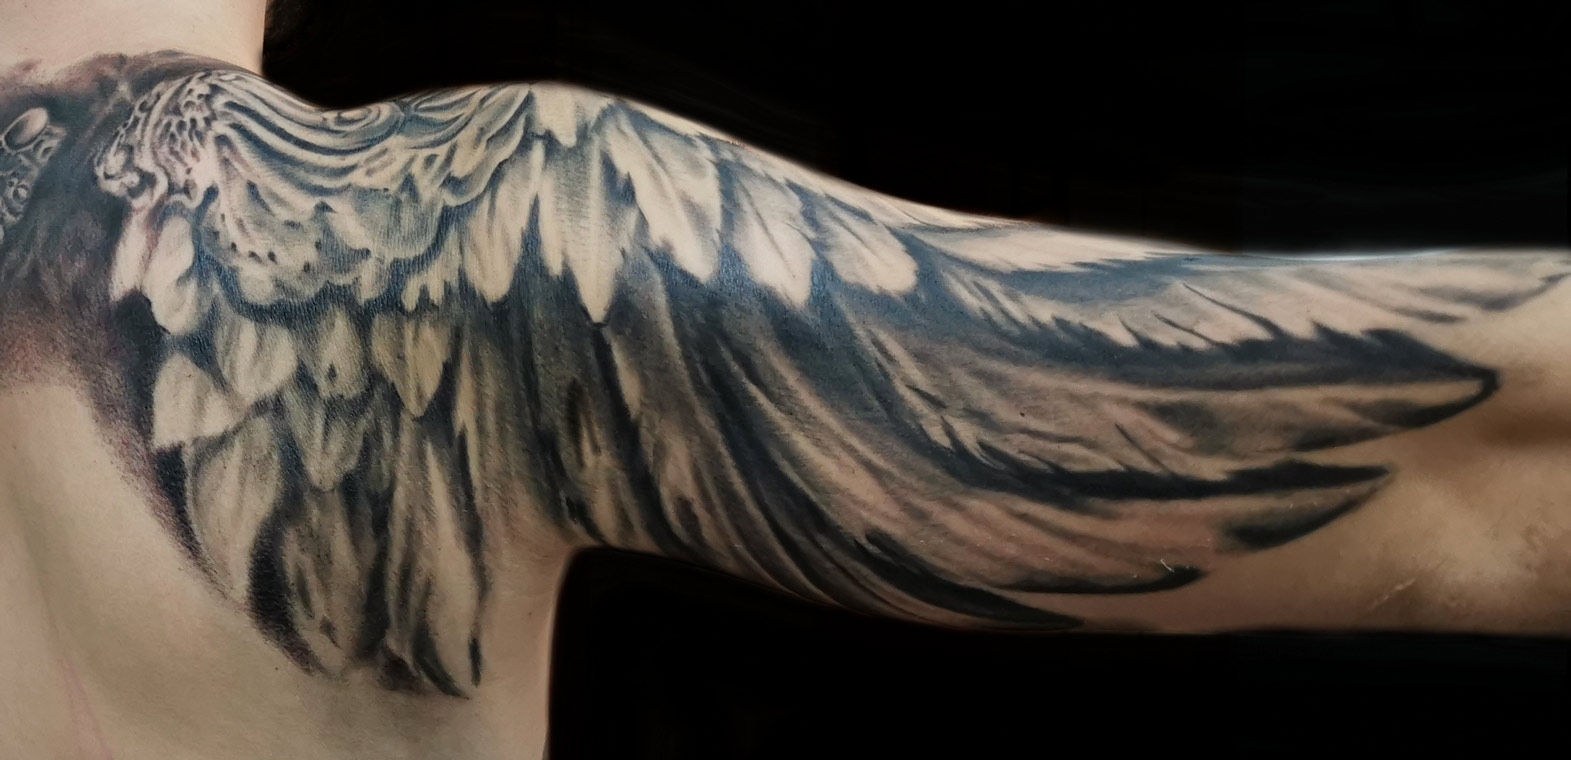 Tattoo Anansi Studio München Munich Haidhausen Ell upper arm shoulder back wings spreaded angek feathers christian spiritual heaven best blackand grey realism